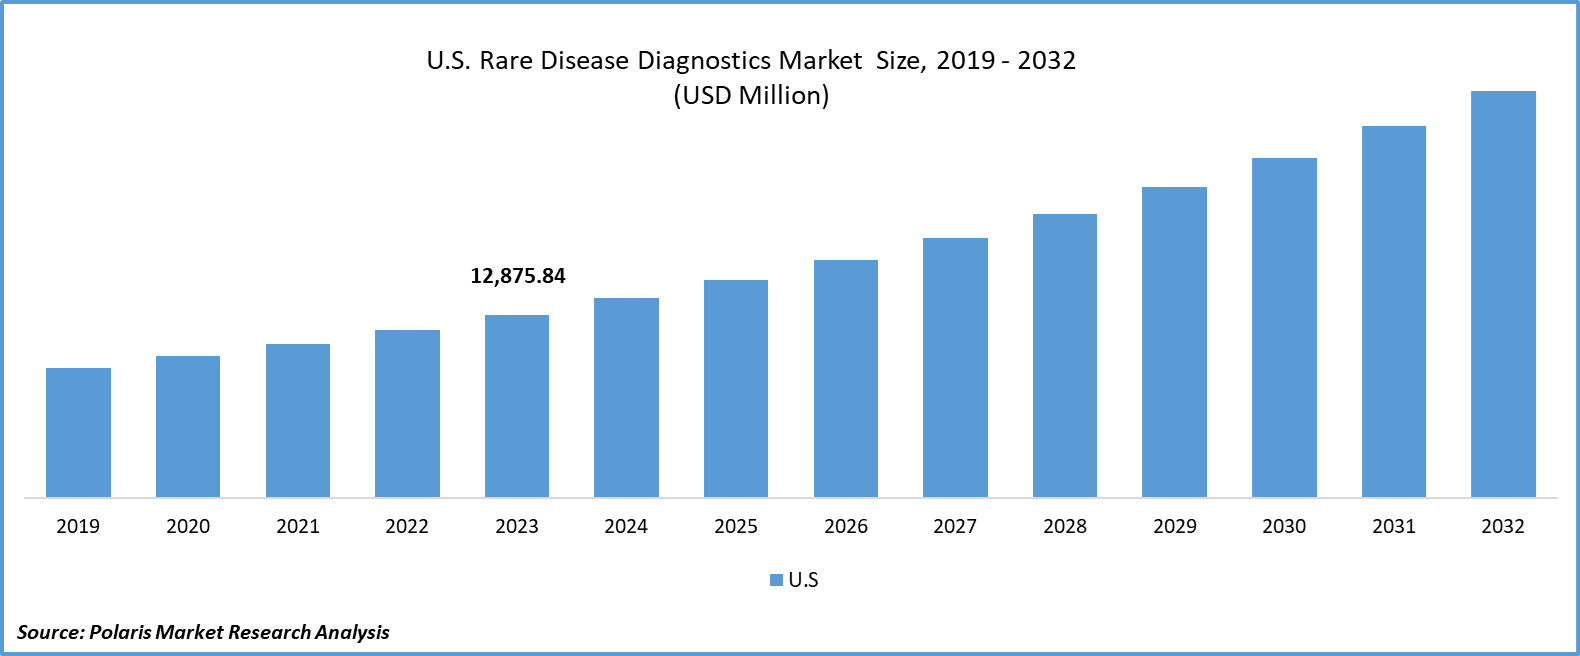 U.S. Rare Disease Diagnostics Market Size